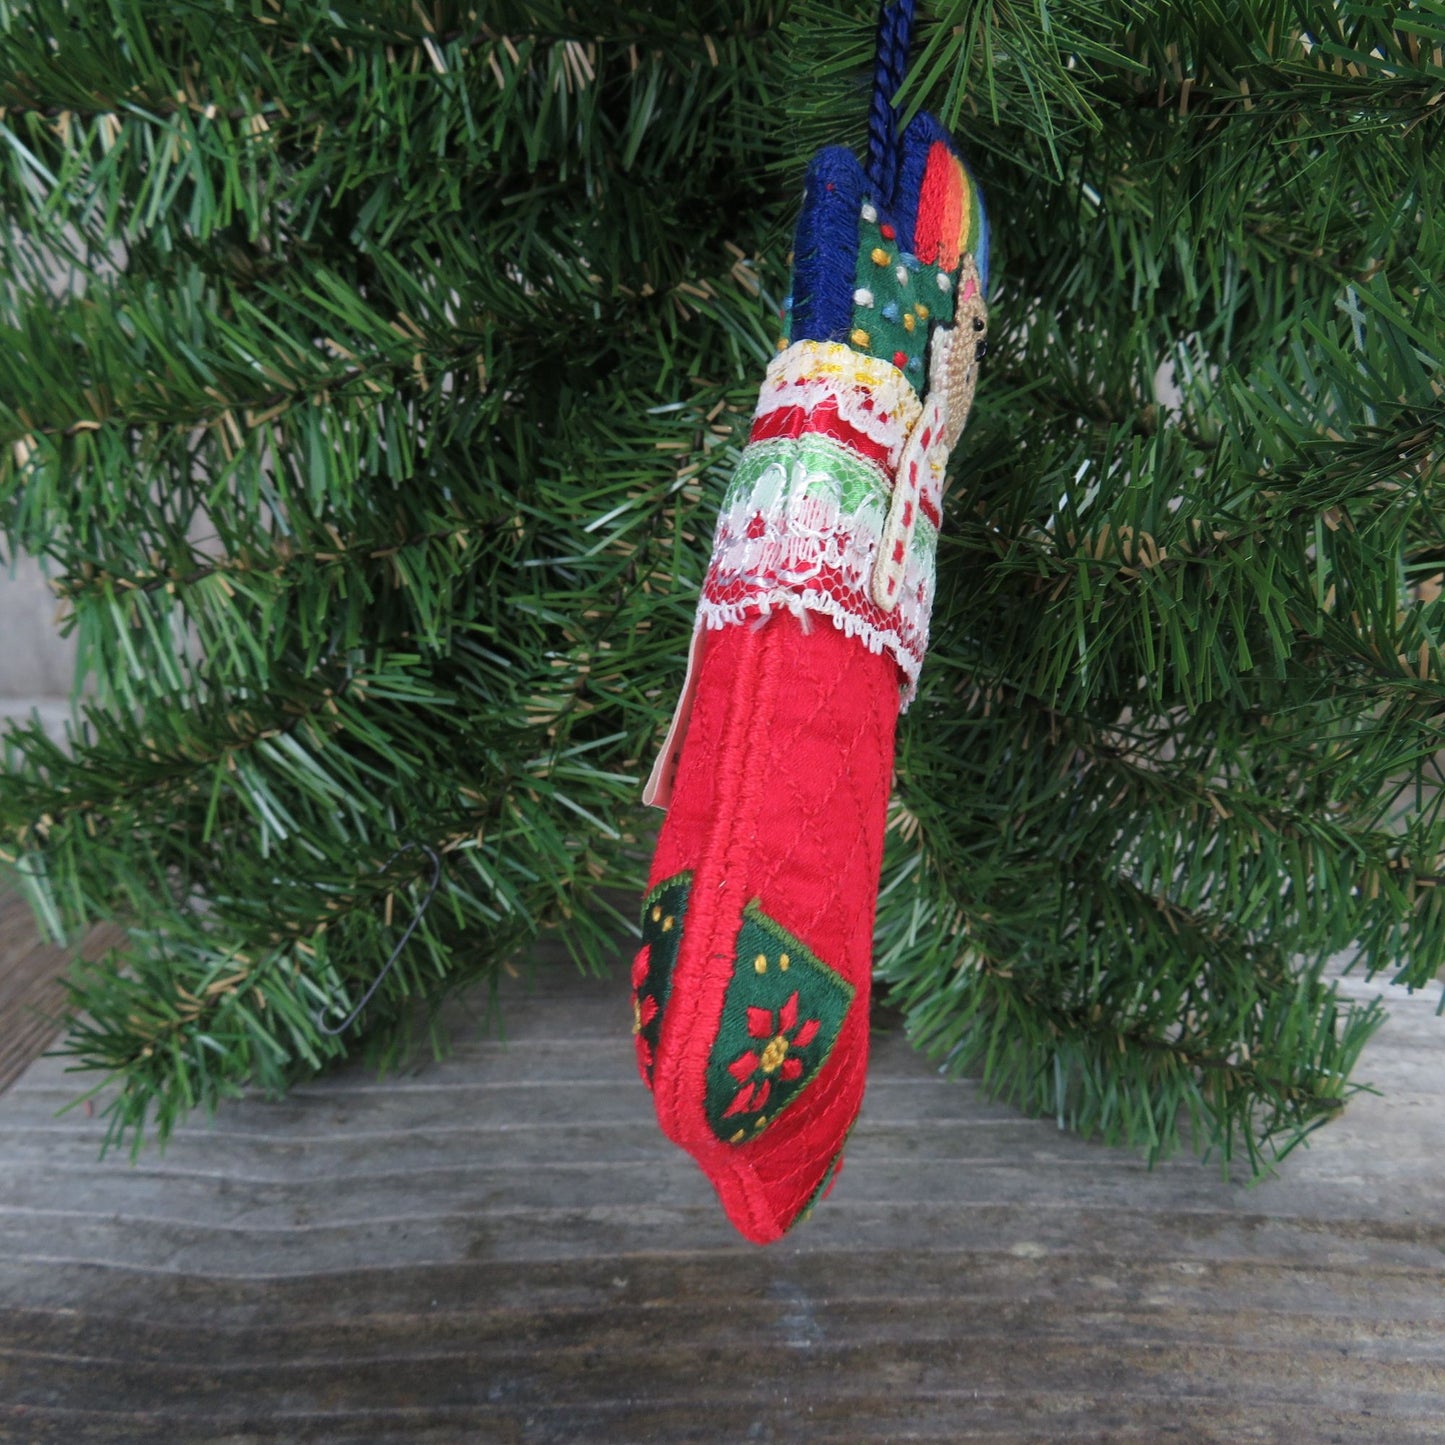 Teddy Bear Soft Stocking Ornament Plush Fabric Needlepoint Hallmark Christmas 1983